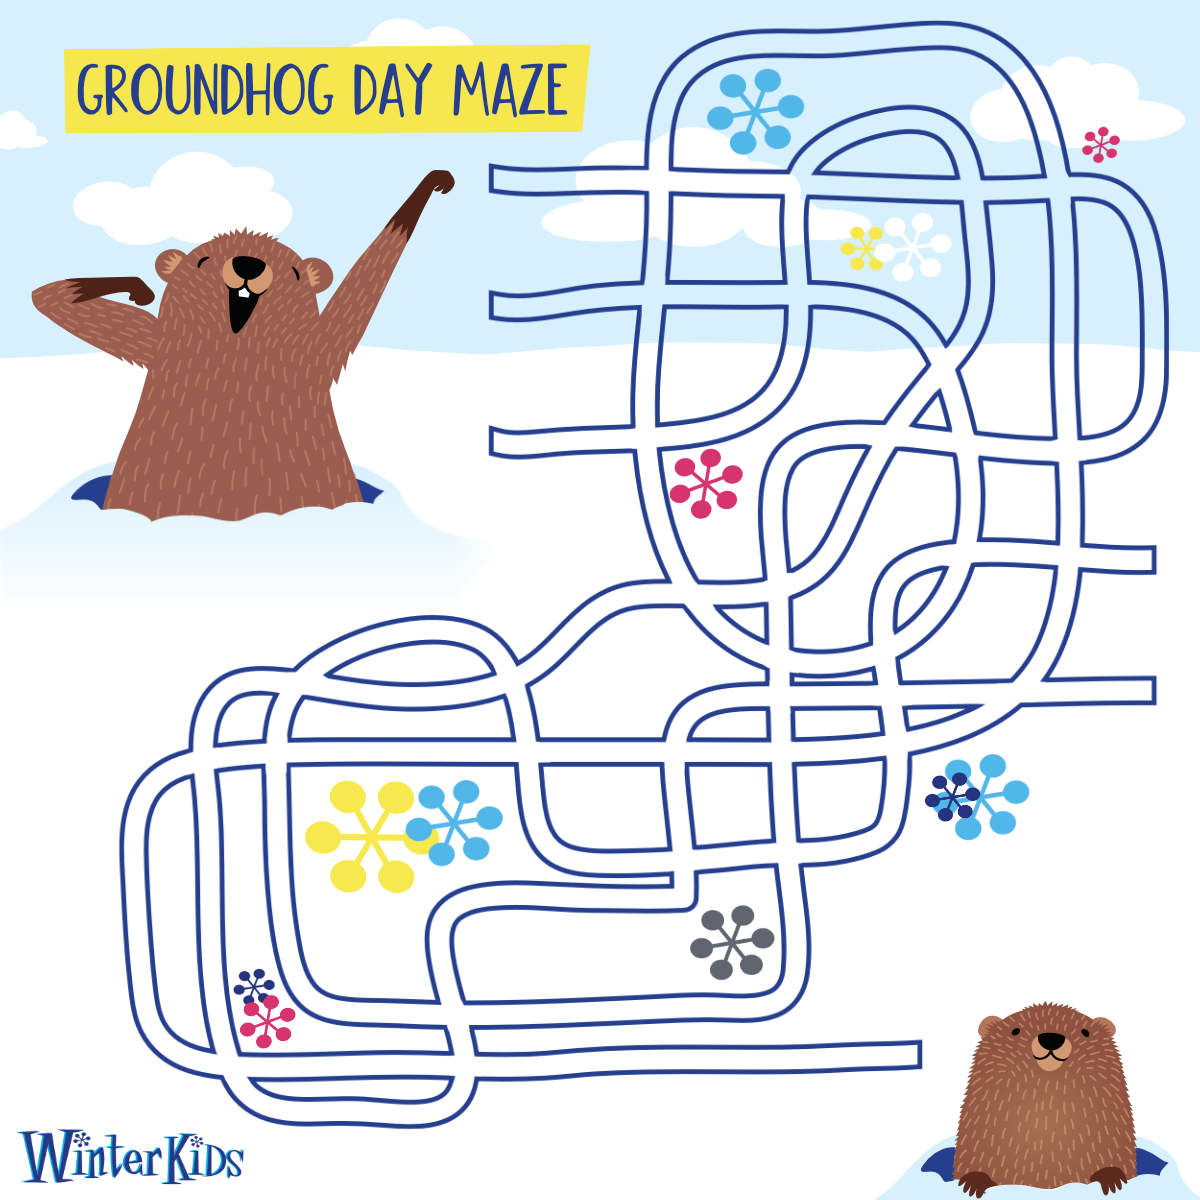 WinterKids Groundhog Day Maze BLOG IMAGE REV